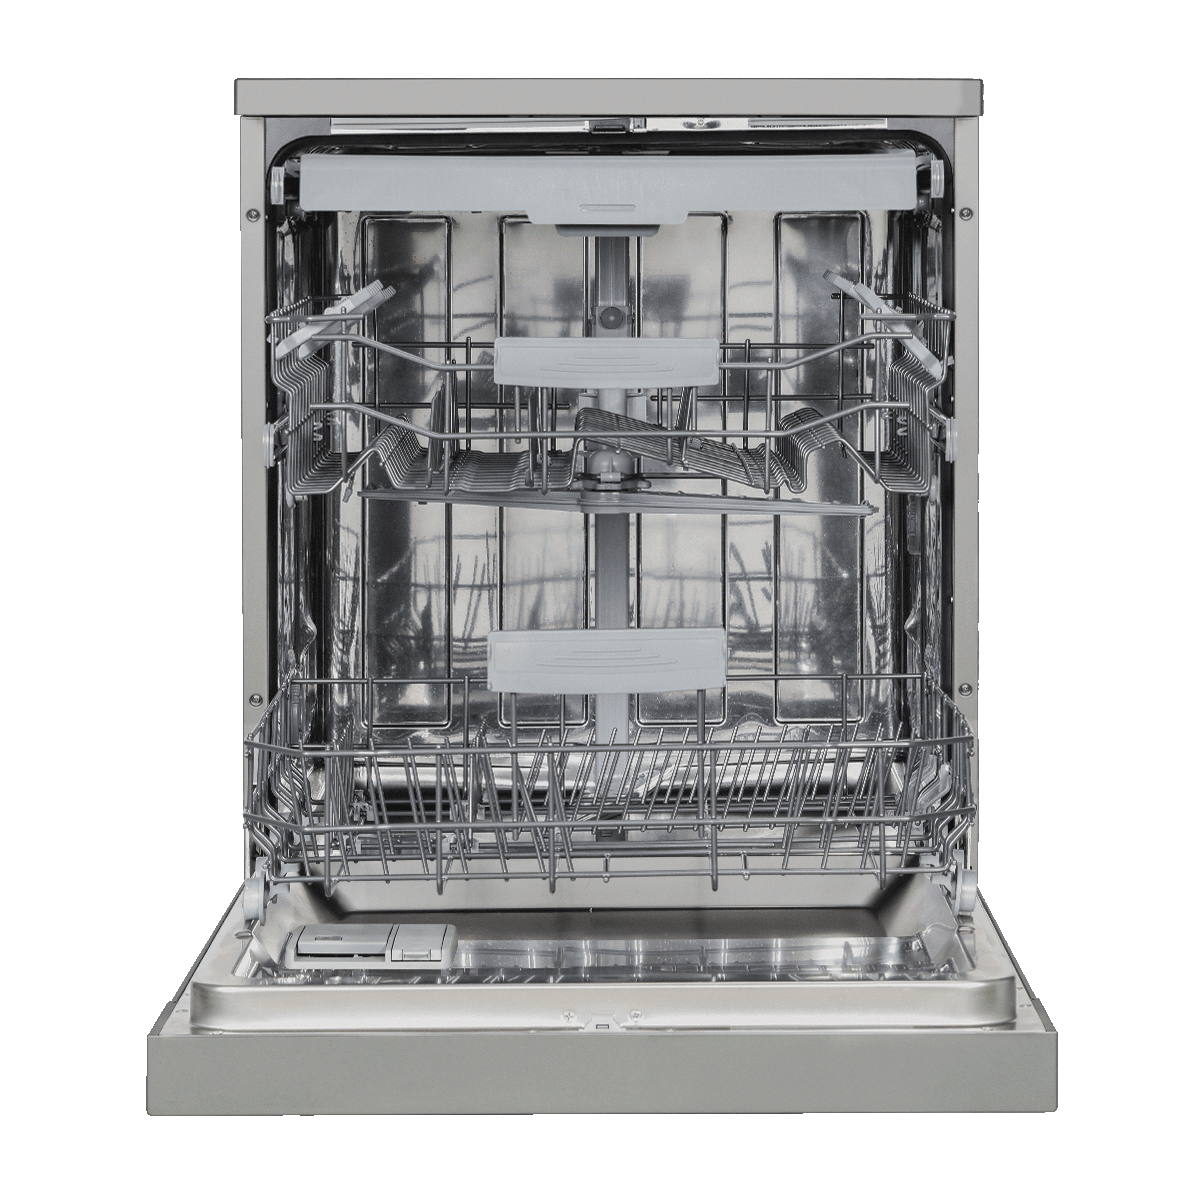 Dishwasher LC 15A22 IXE 